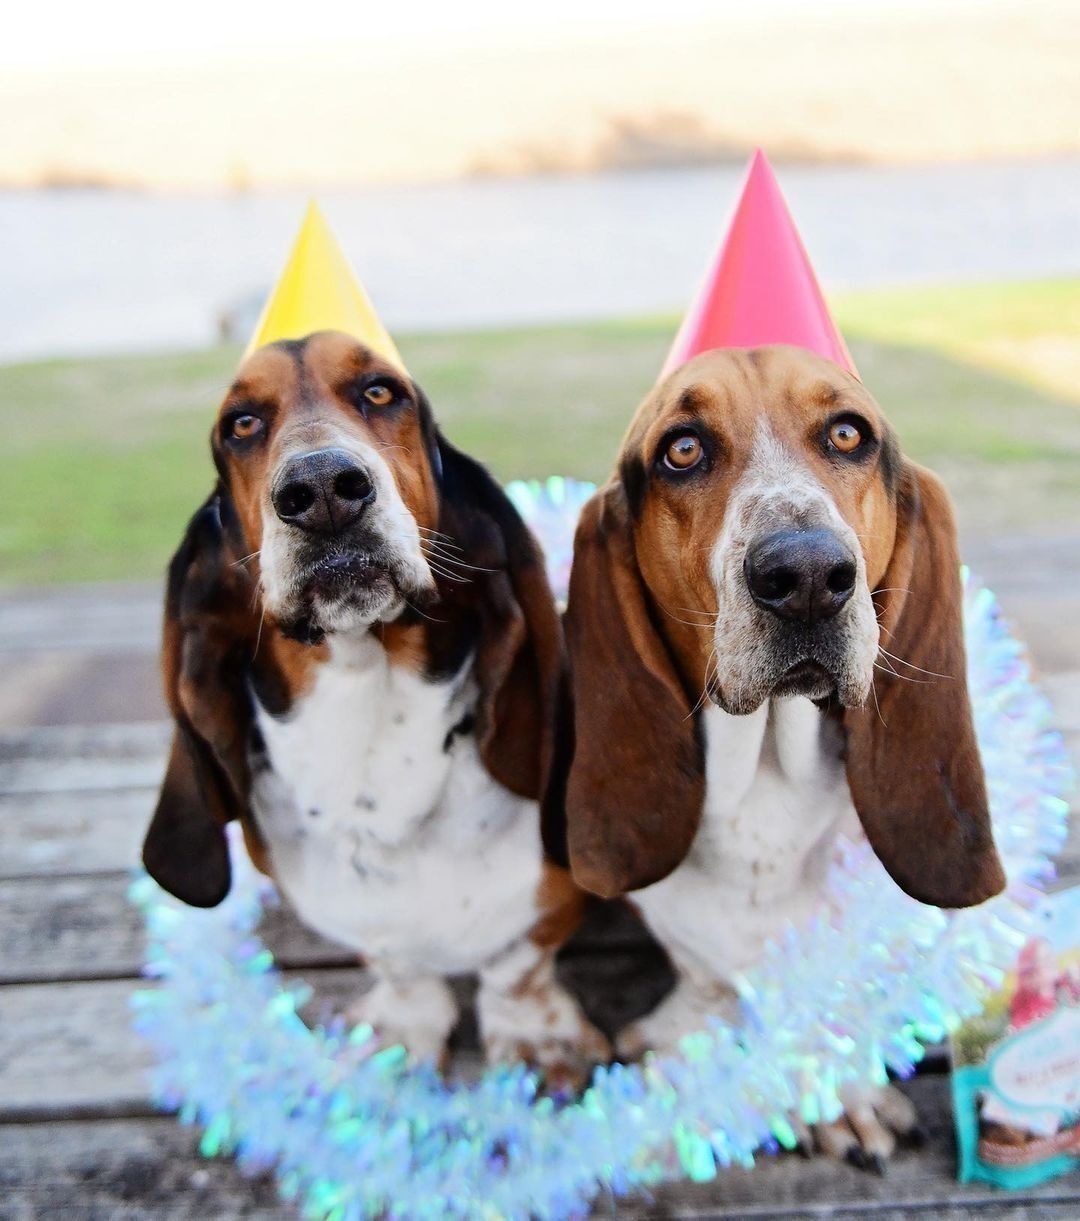 belated birthday funny animals